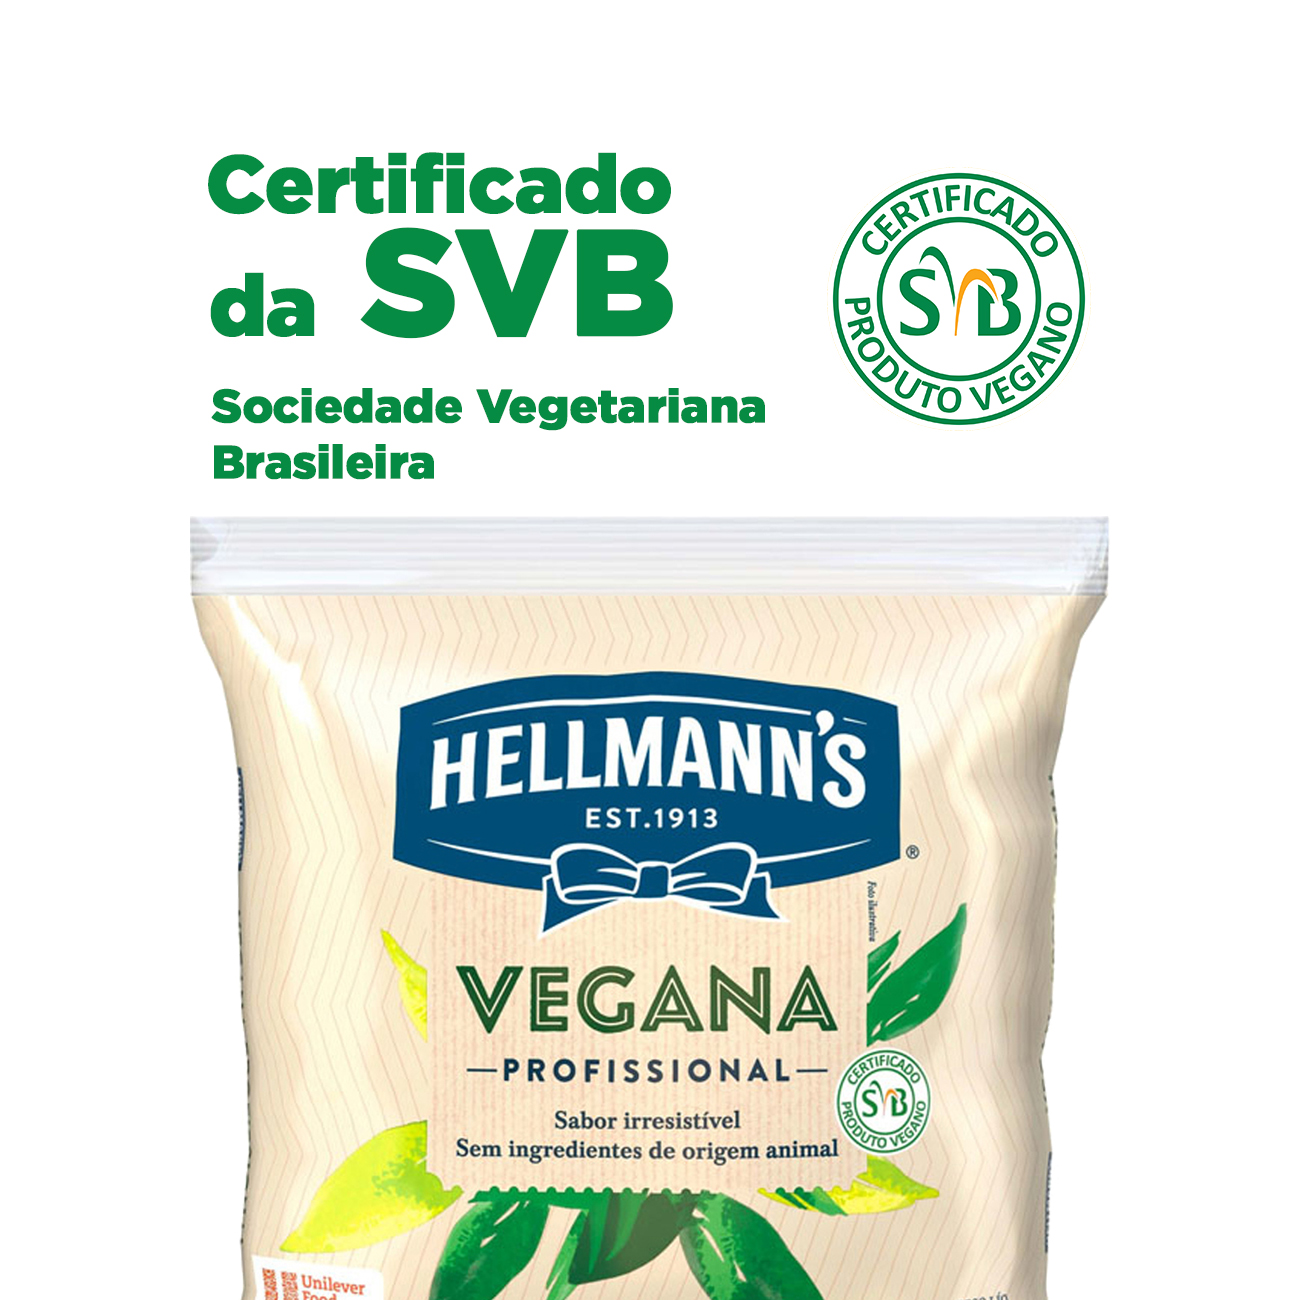 Maionese Hellmann's Vegana Bag 1,6kg